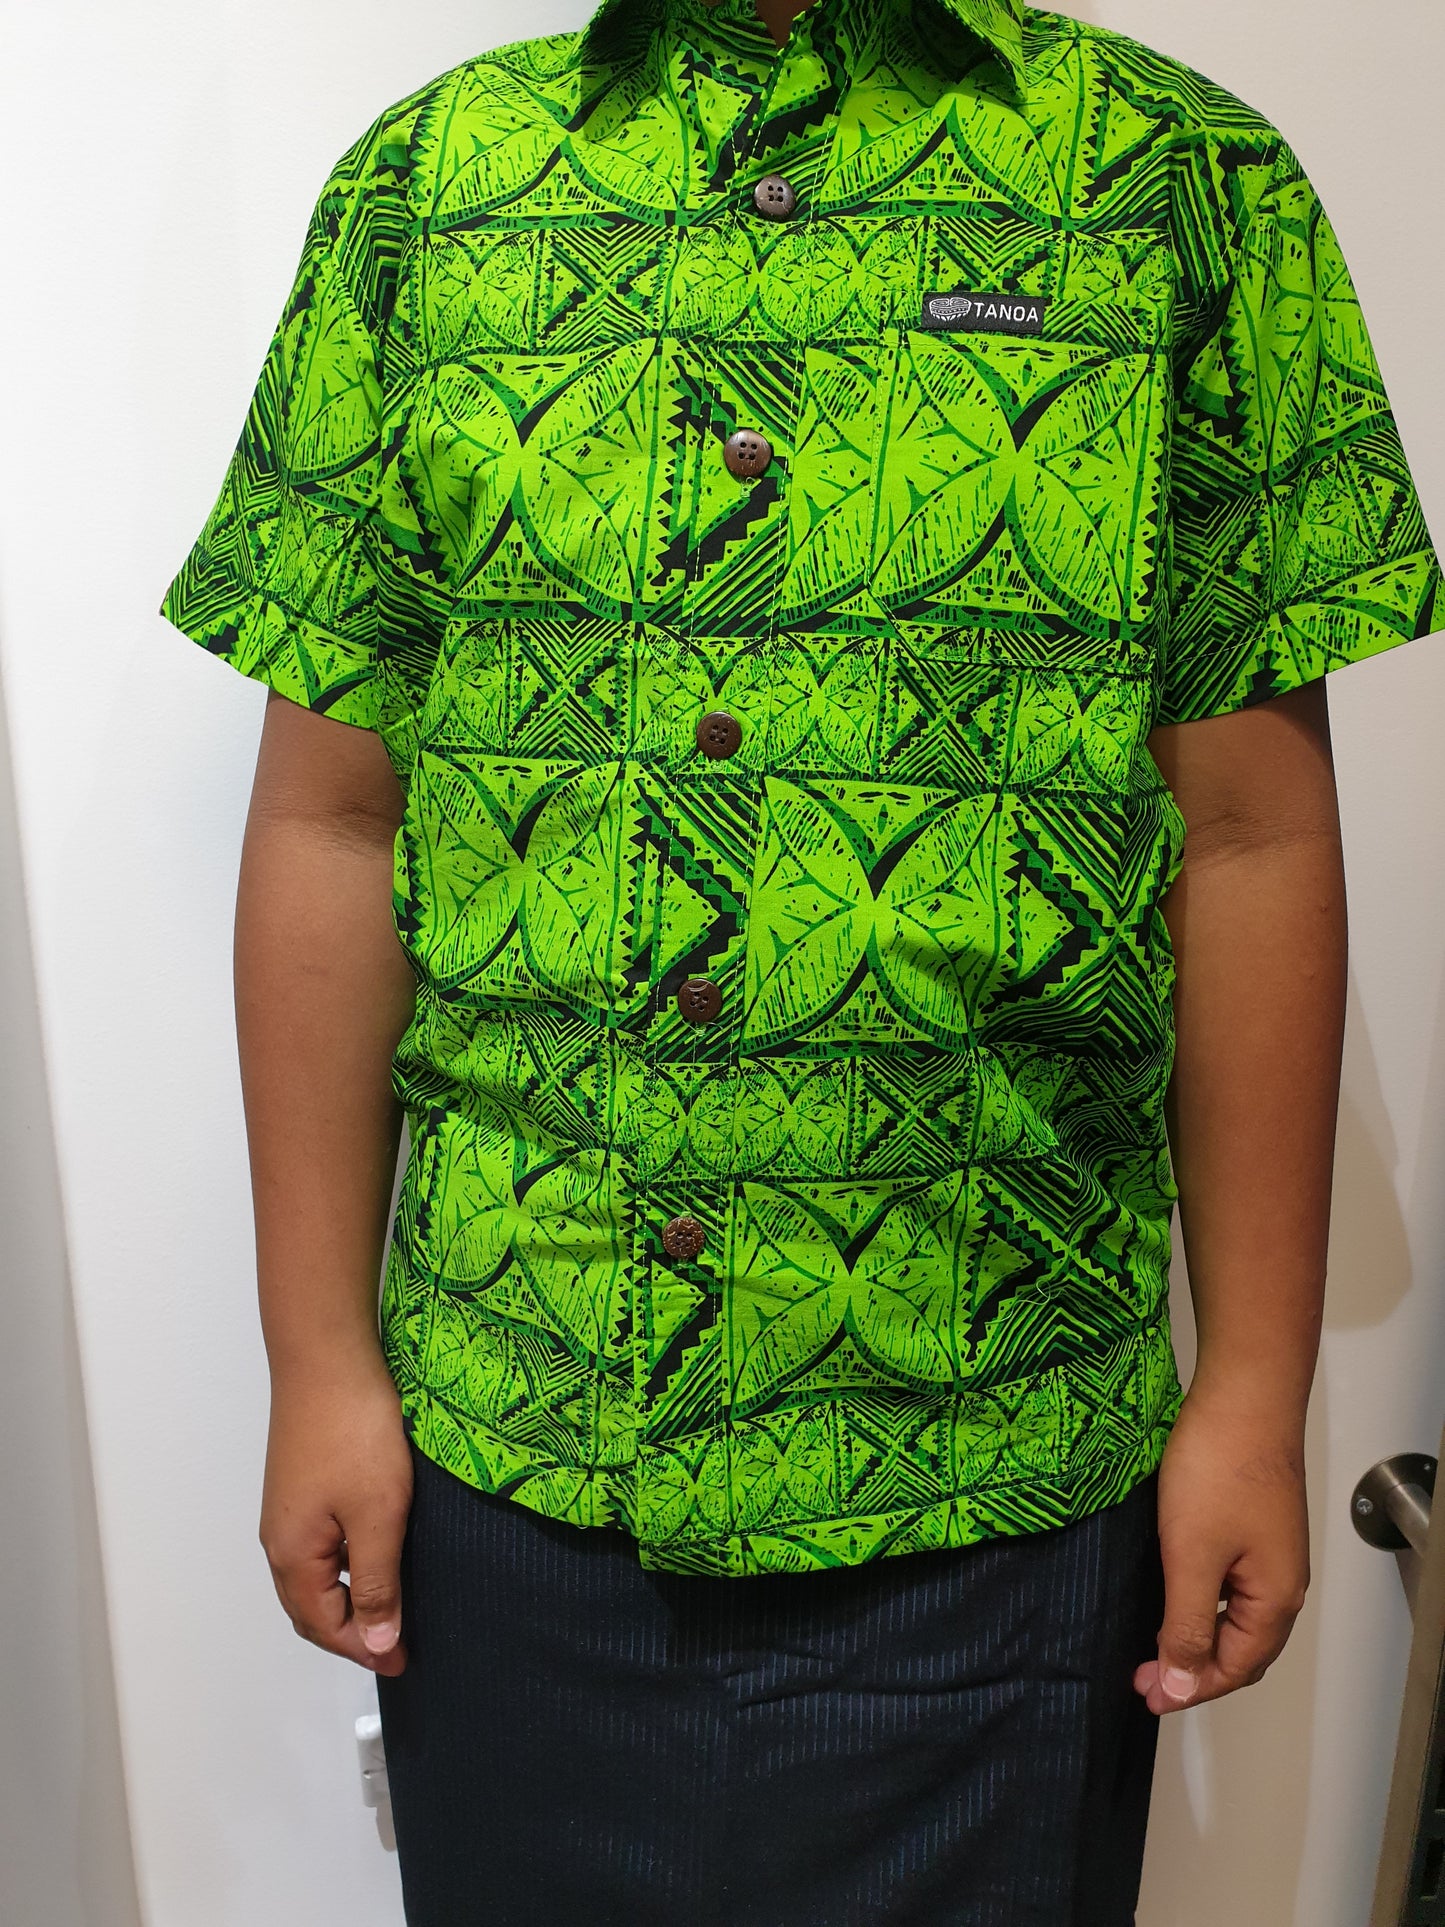 Tanoa Boys Bula Shirt - SB872 - Lime